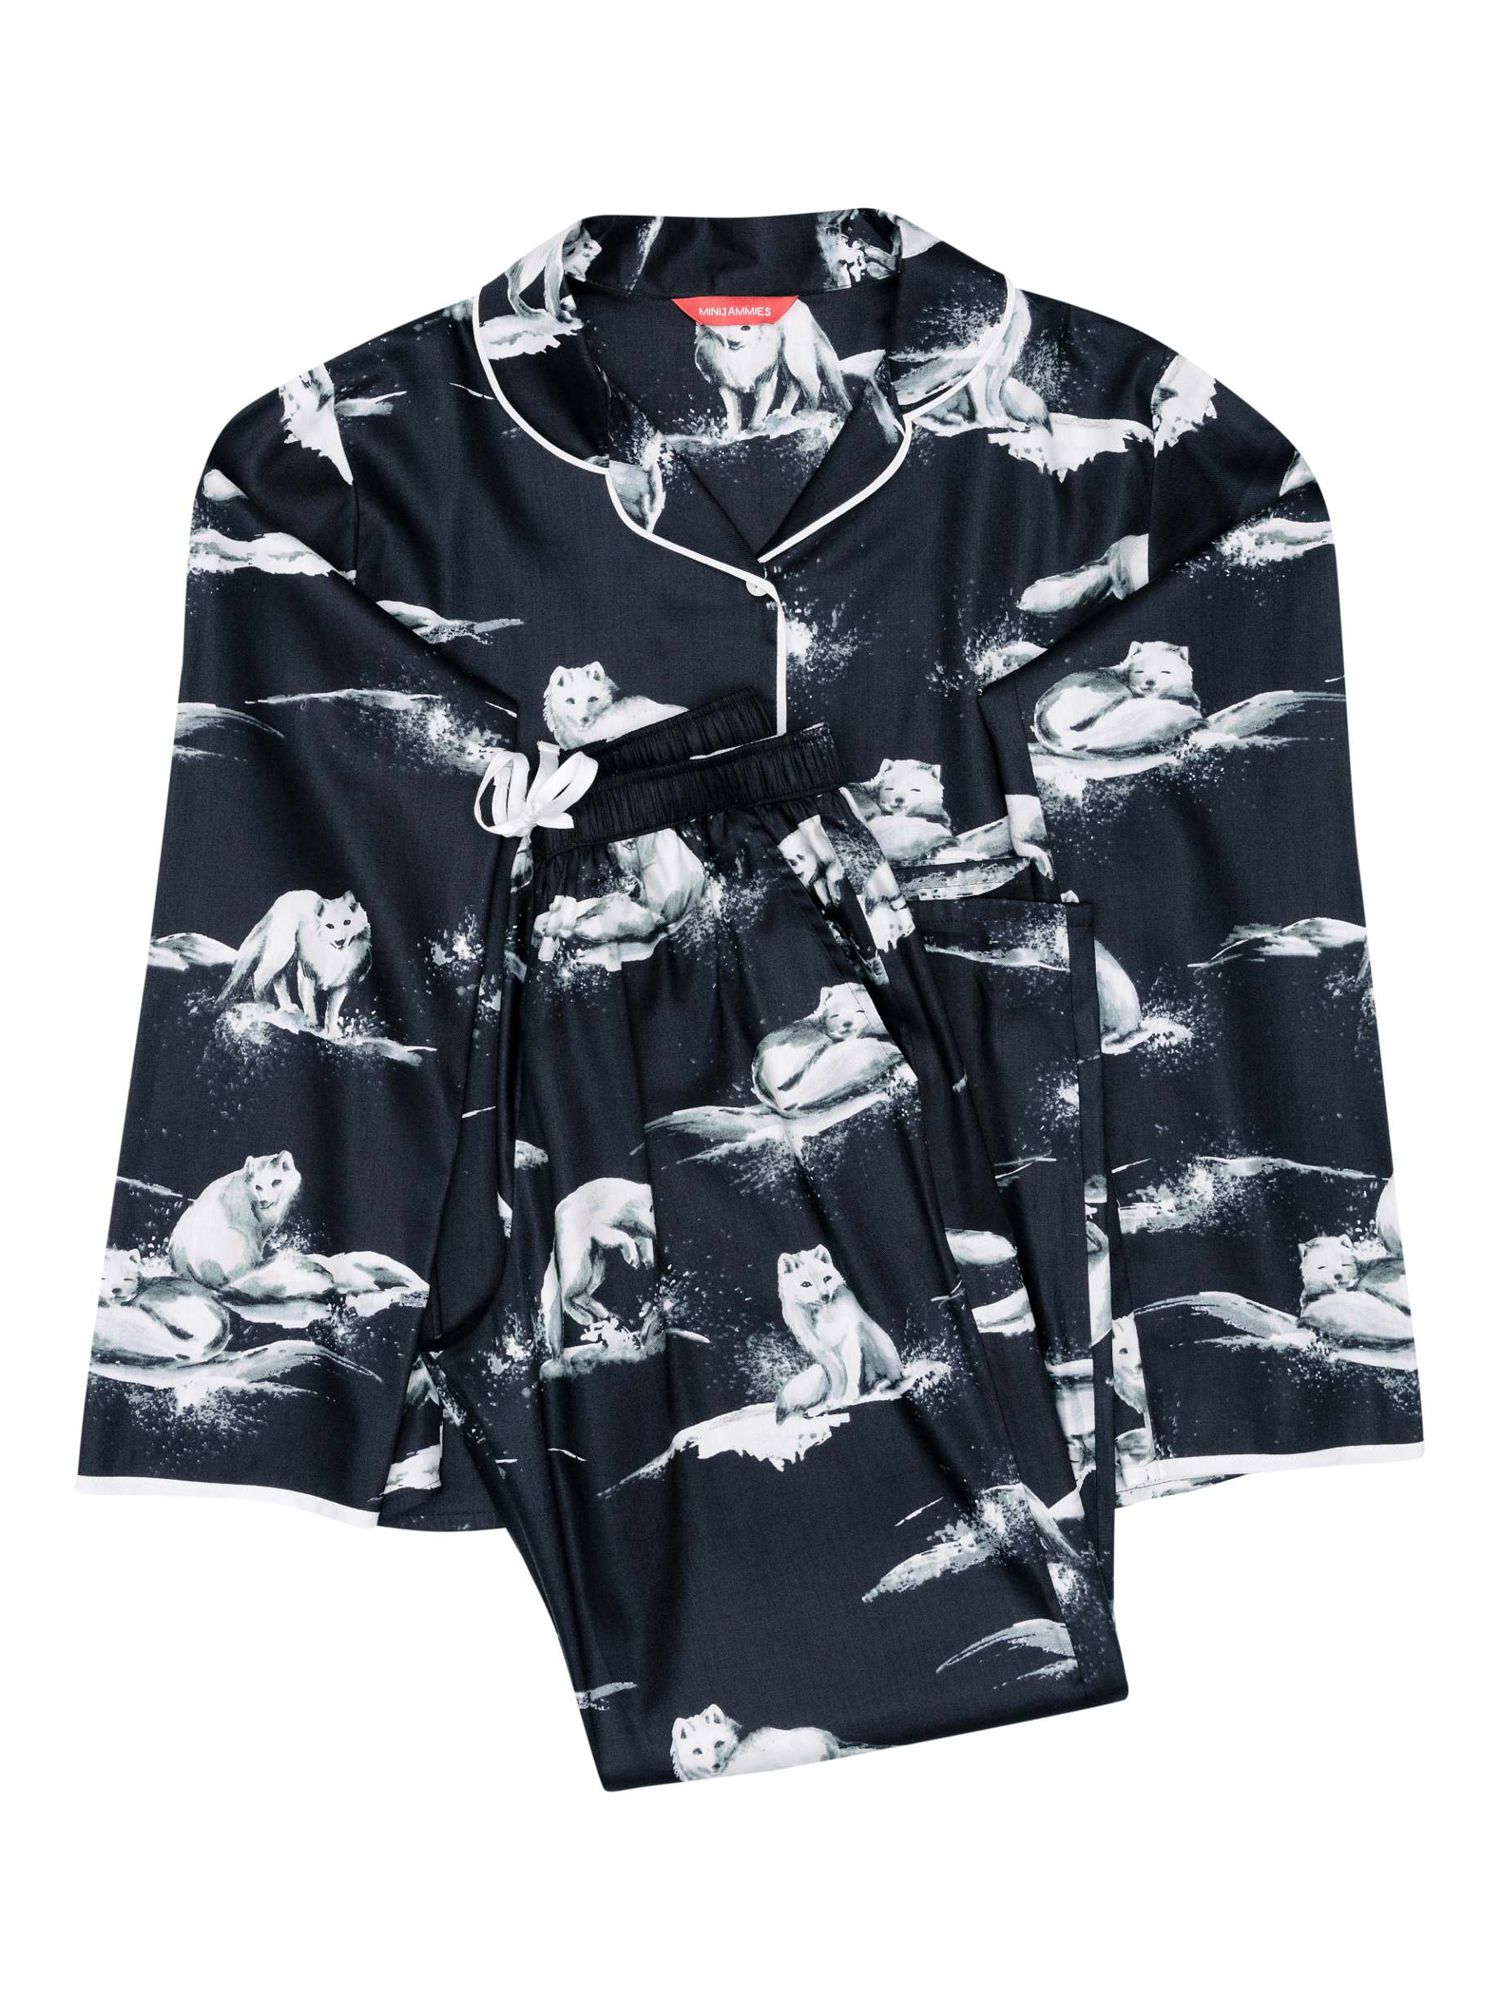 Cyberjammies Atlas Arctic Fox Print Unisex Pyjama Set, Charcoal, 2-3 years